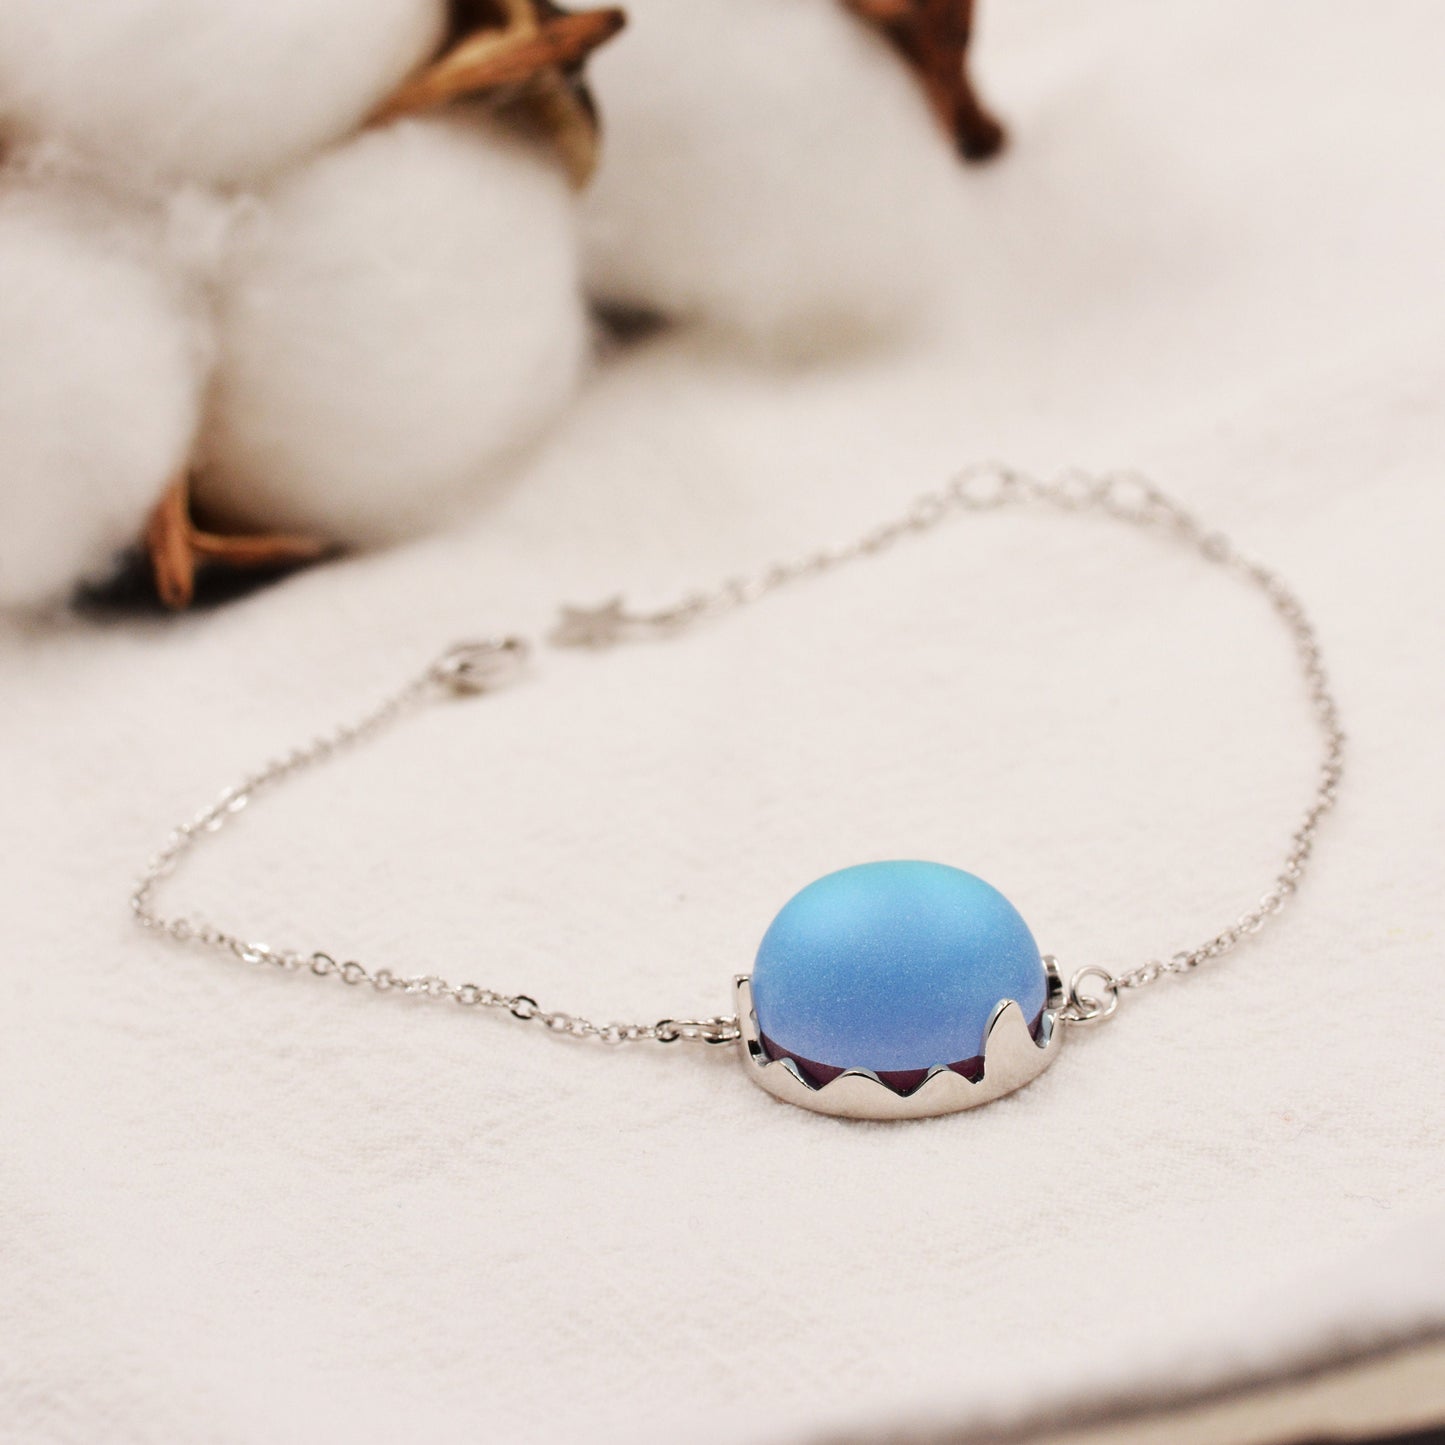 Aurora Crystal Bracelet in Sterling Silver, Northern Lights Bracelet with Blue Flash Simulated Moonstone